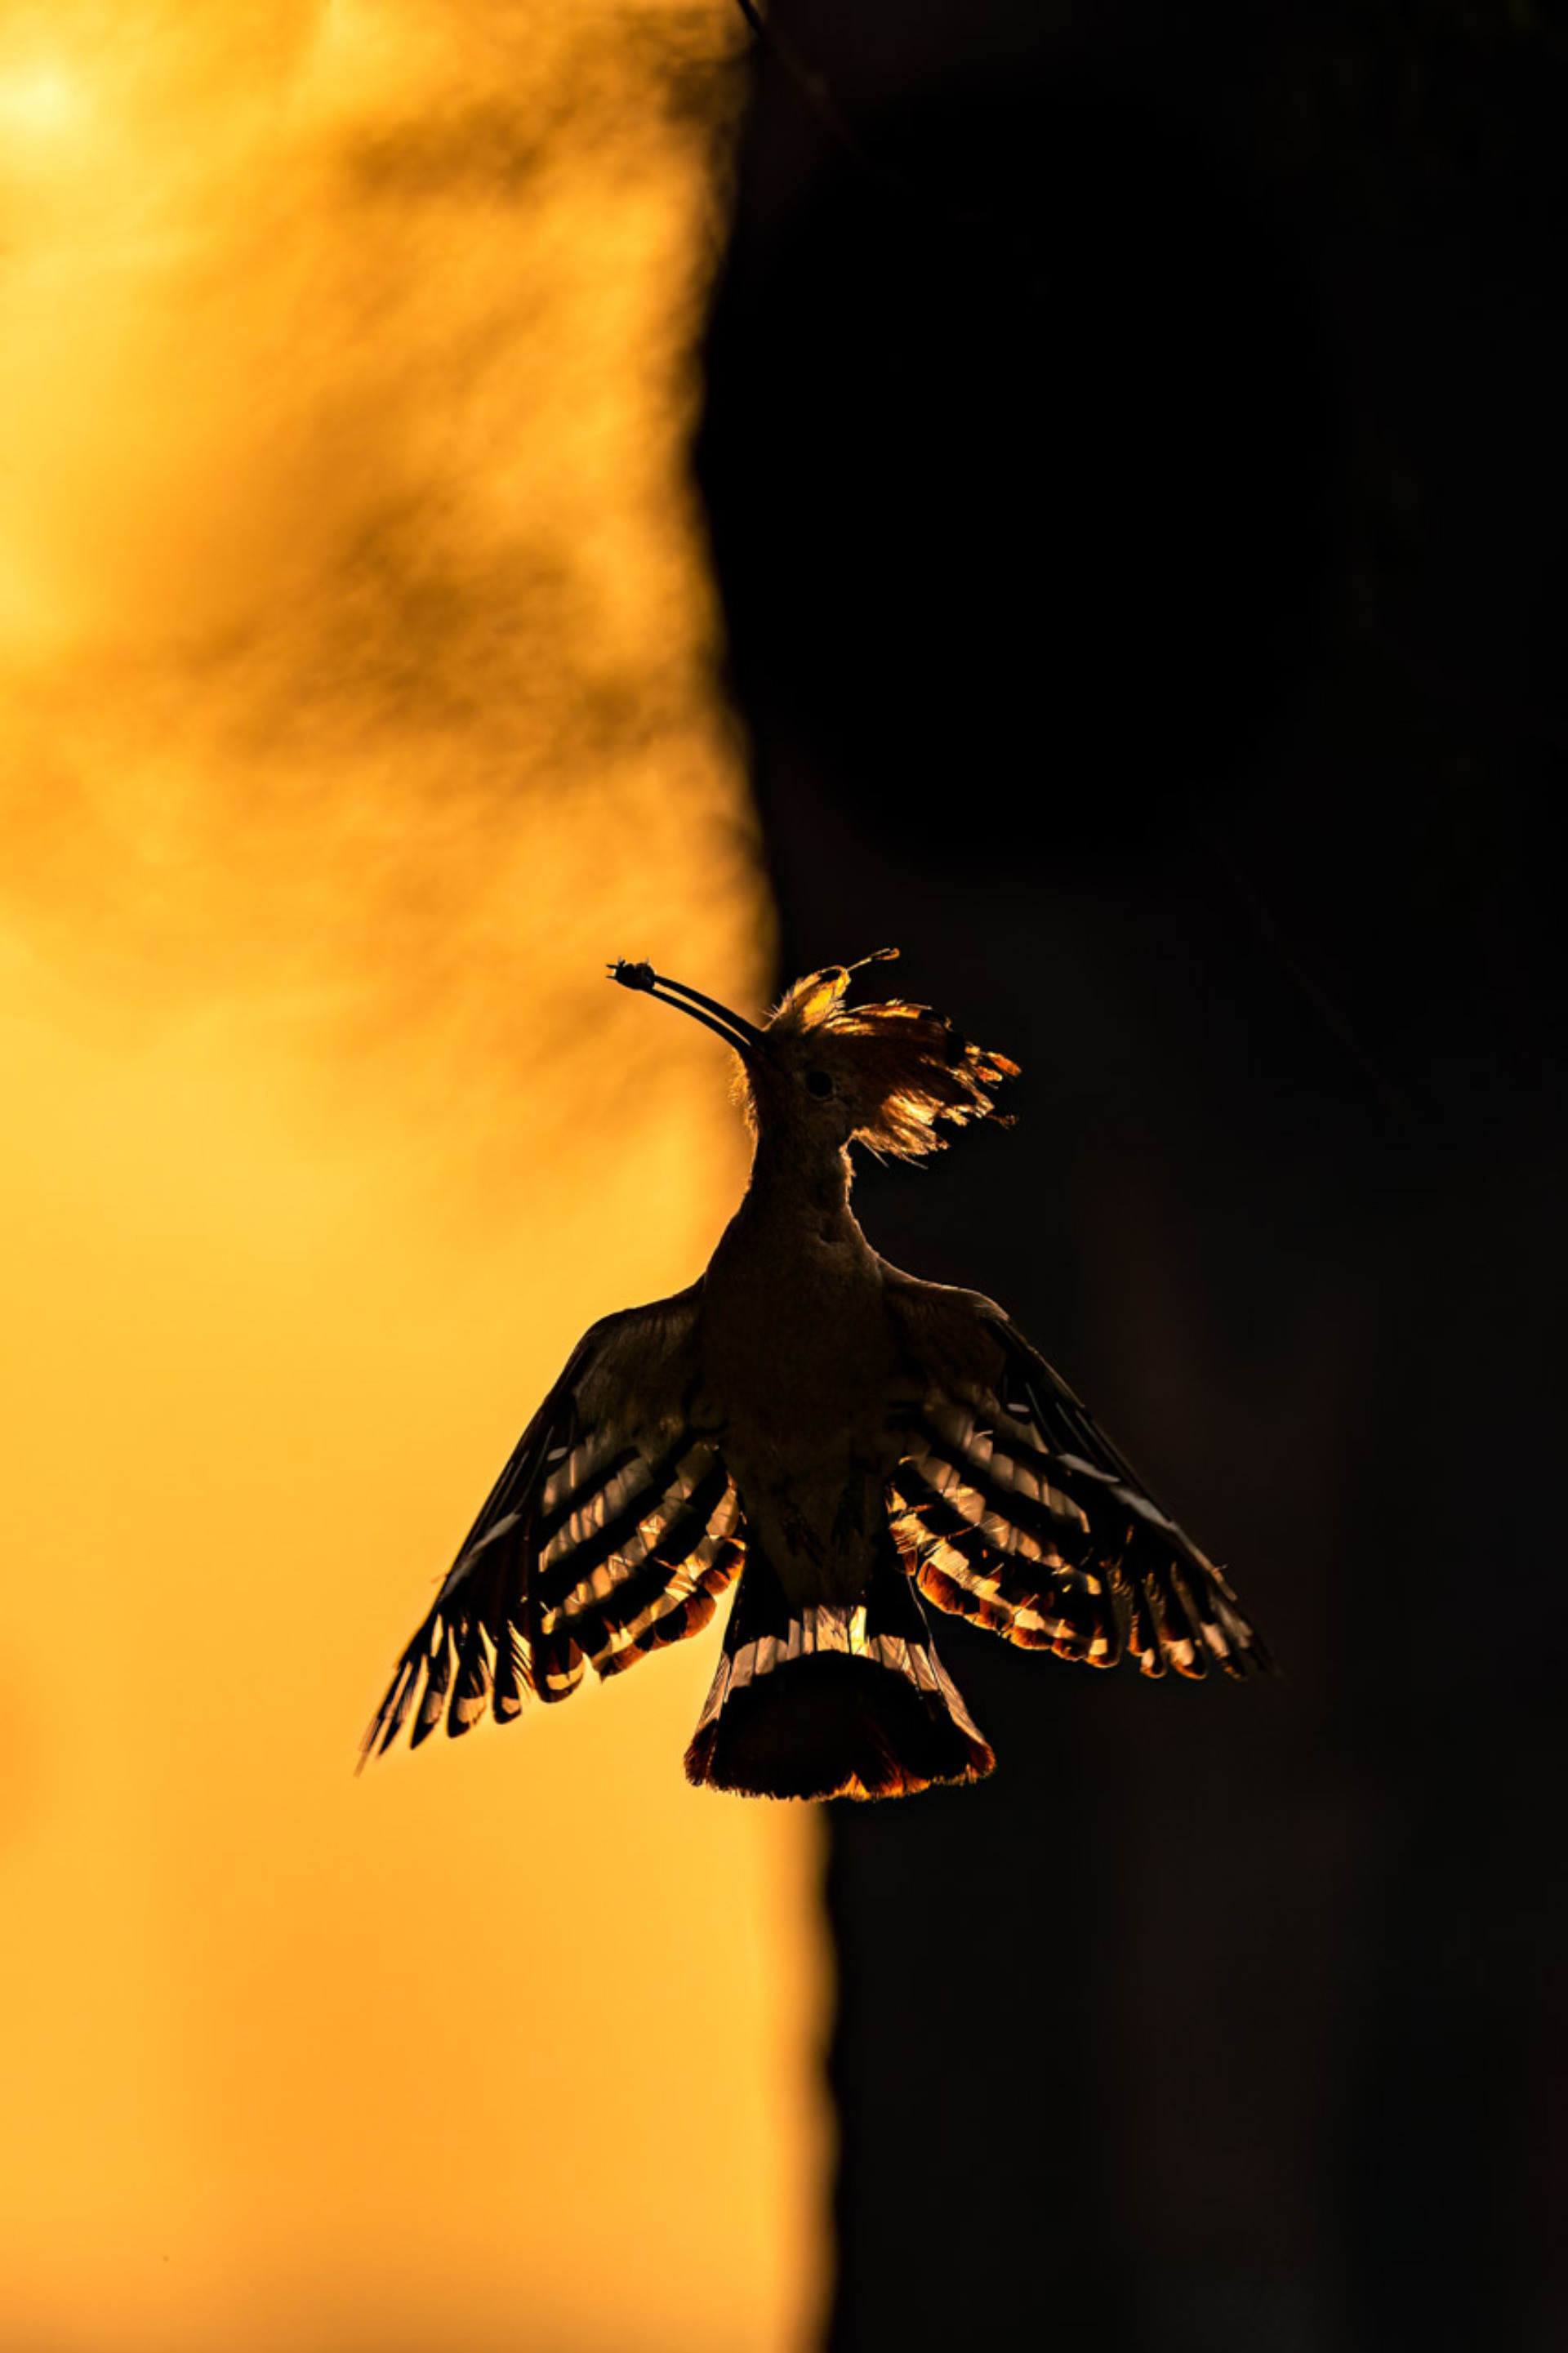 npoty-photo-contest-2023-dawn-s-whispers-graceful-hoopoe-silhouette-at-sunrise-hermis-valiyandiyil-winner-c1-birds.jpg